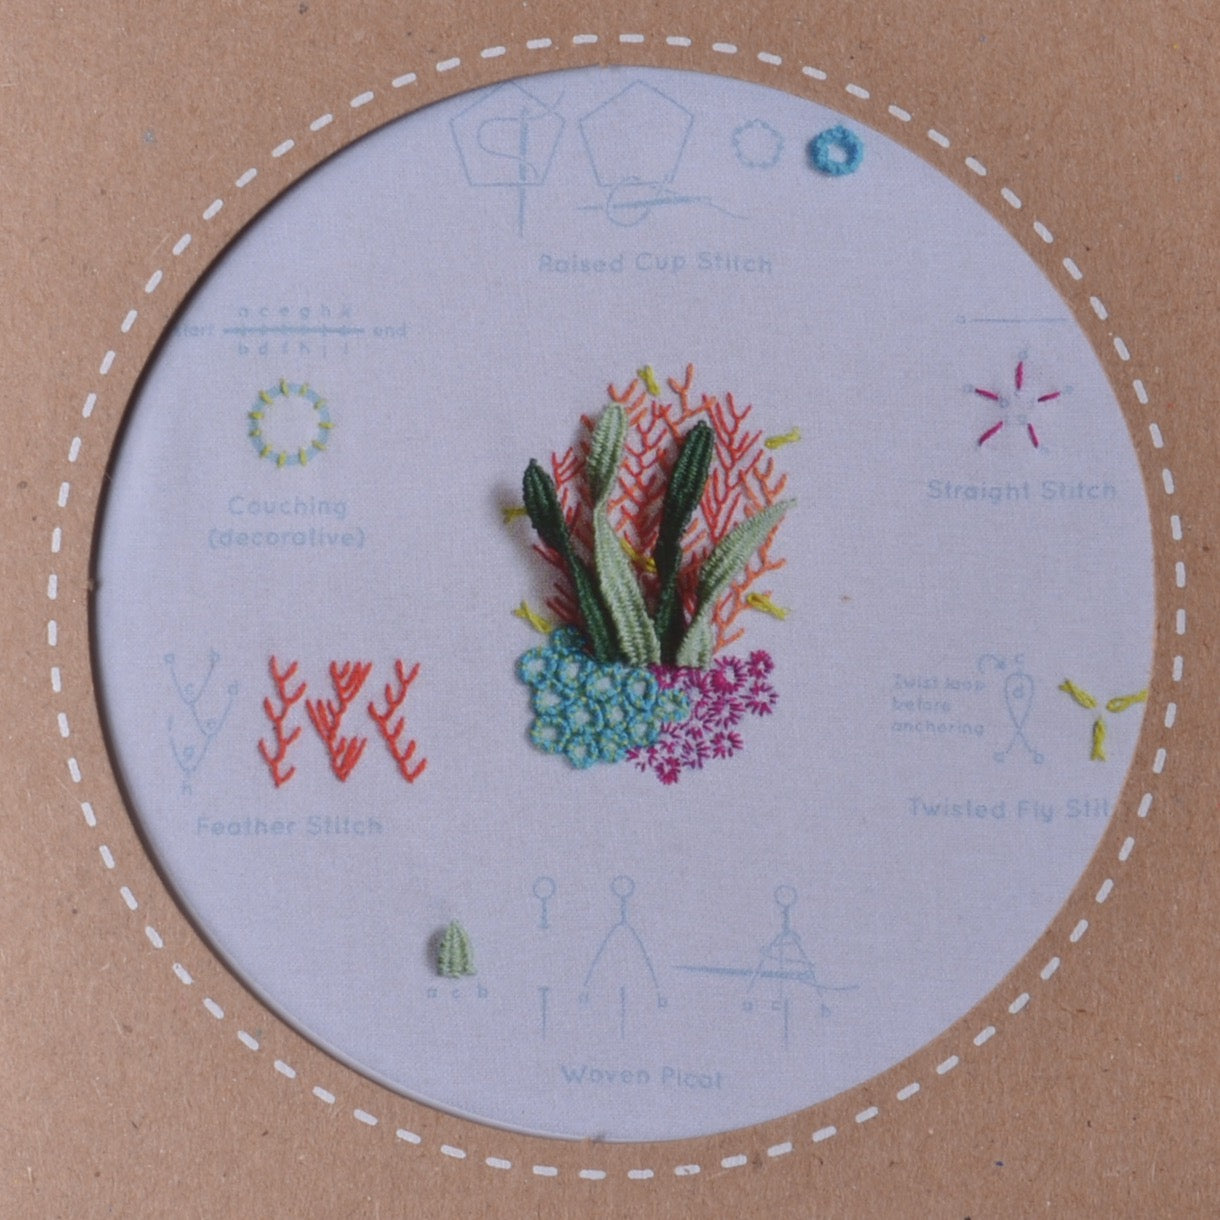 Hidamari Sashiko Embroidery Needles - Stitched Modern